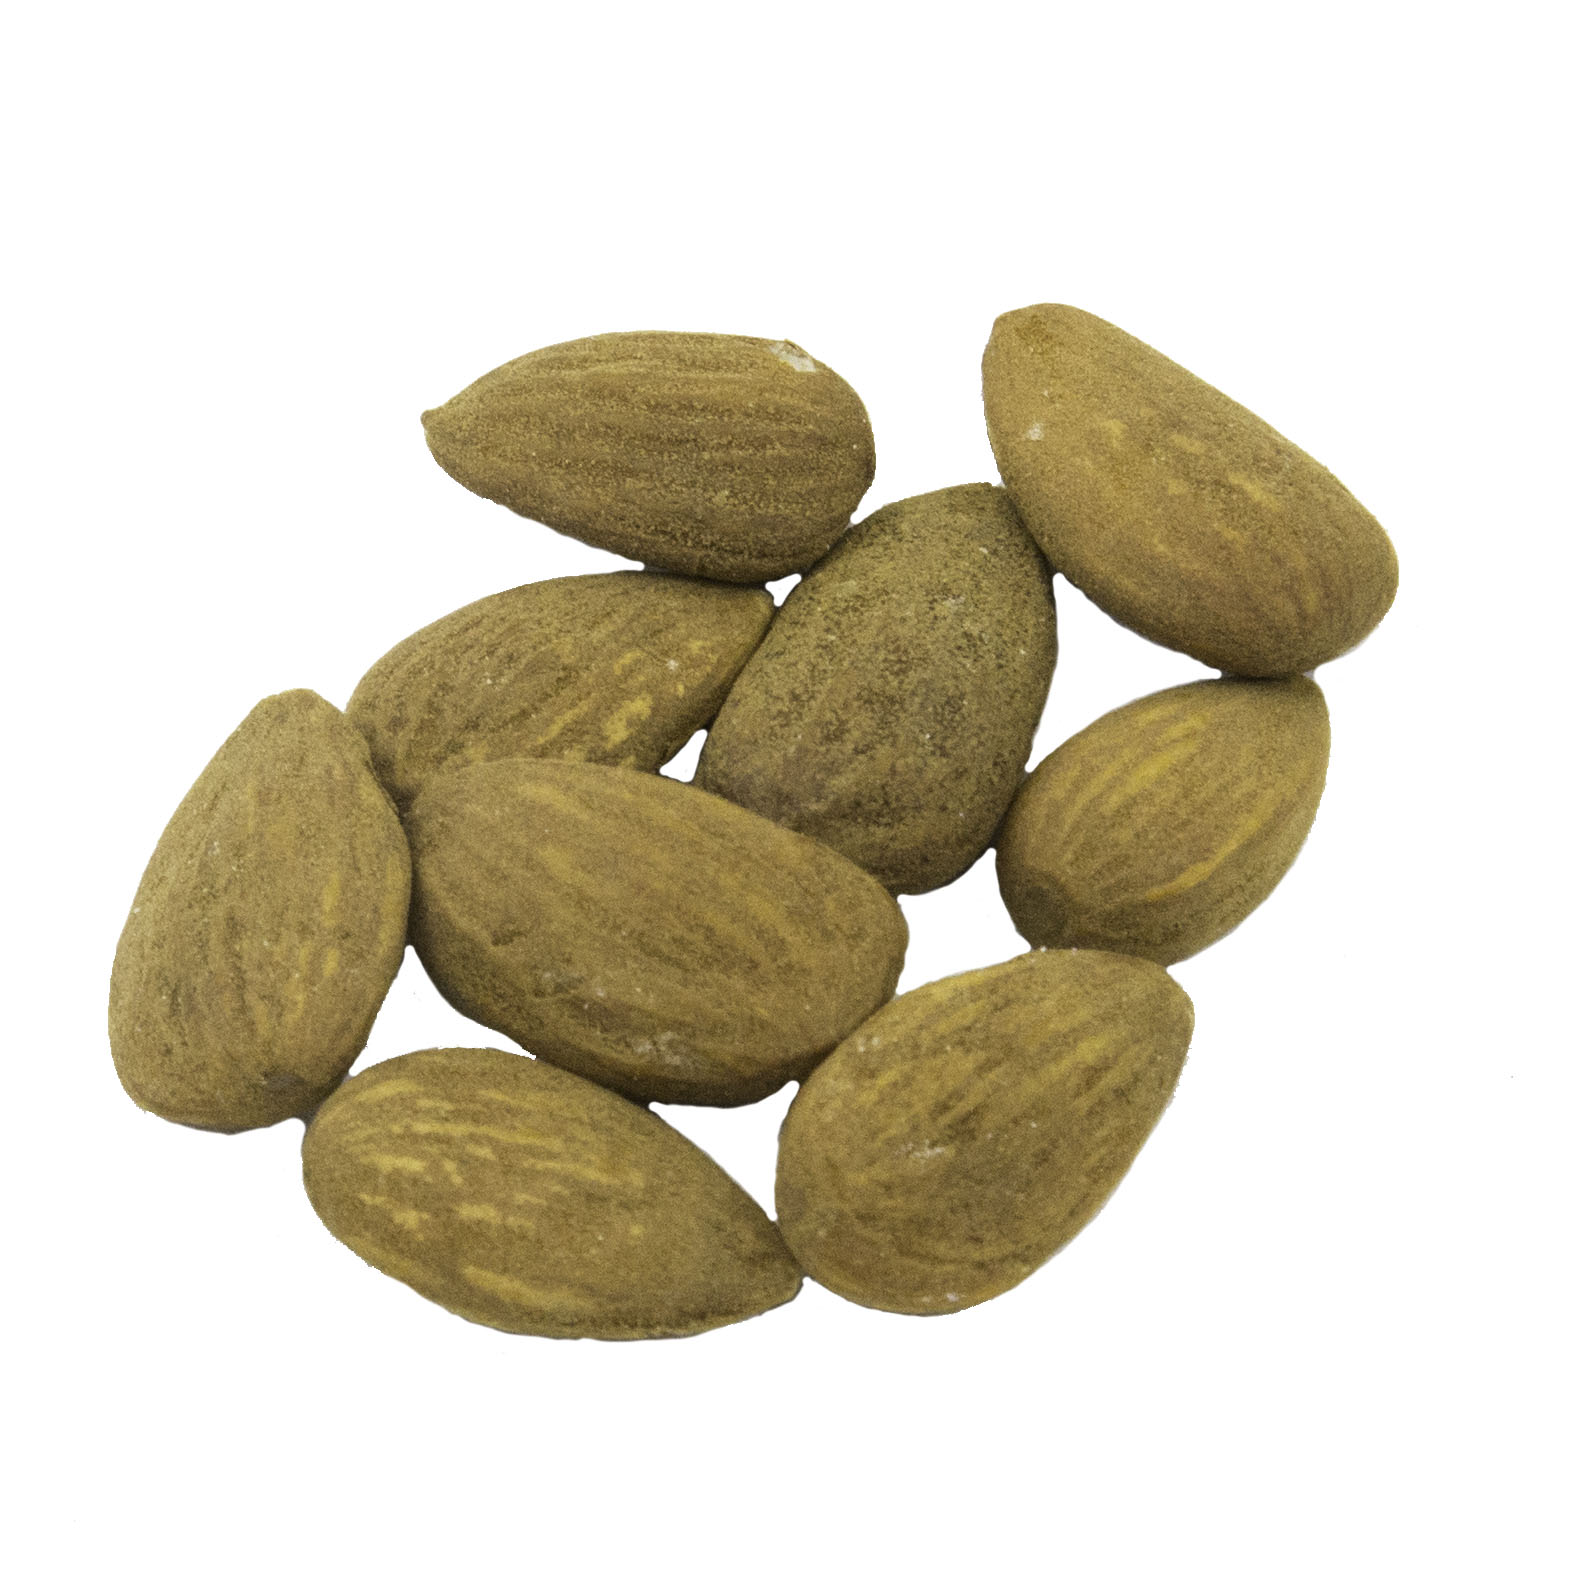 Organic Spanish Unpasteurized Almonds